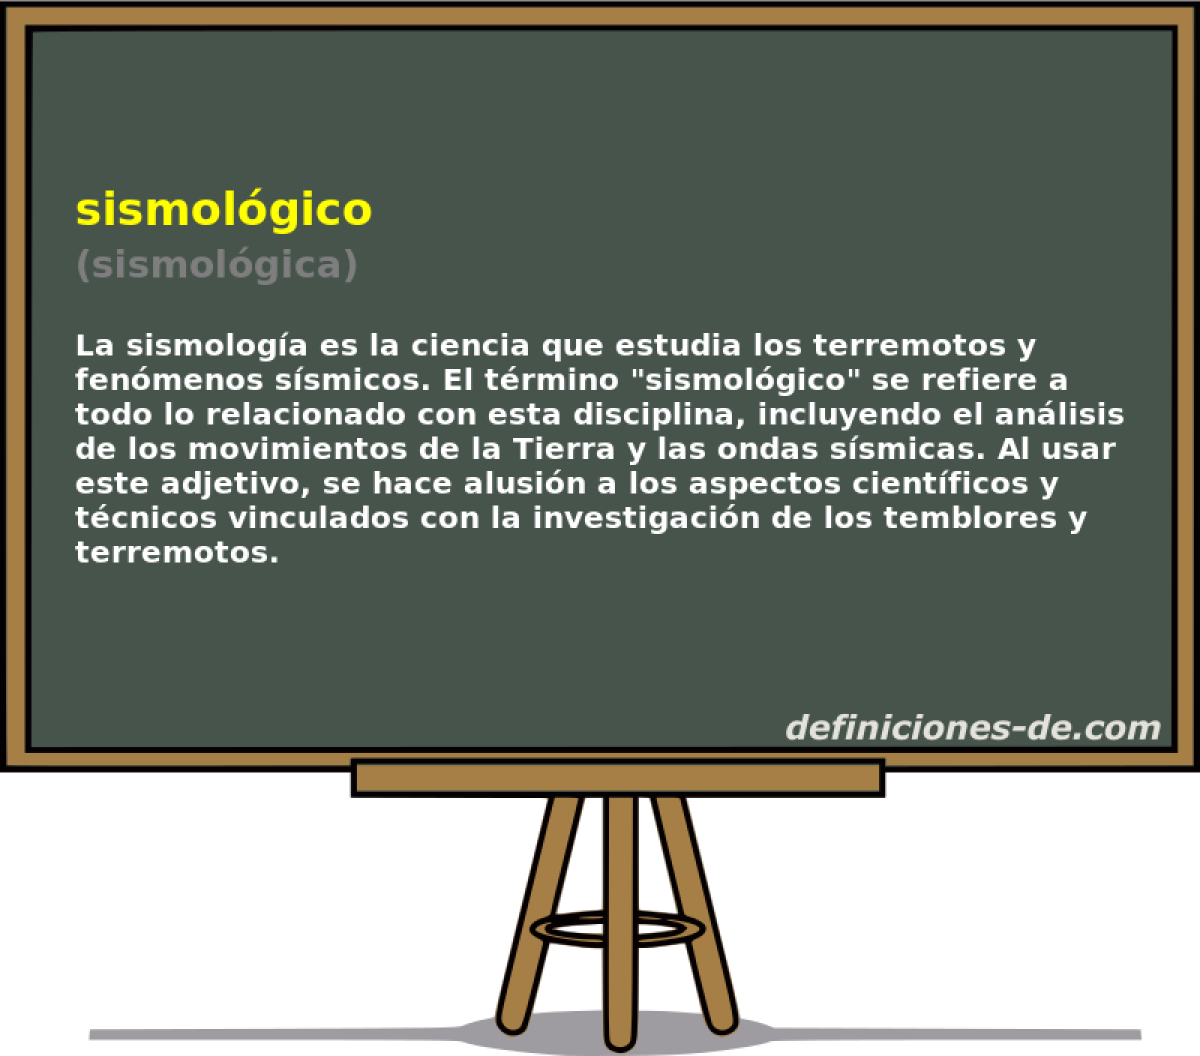 sismolgico (sismolgica)